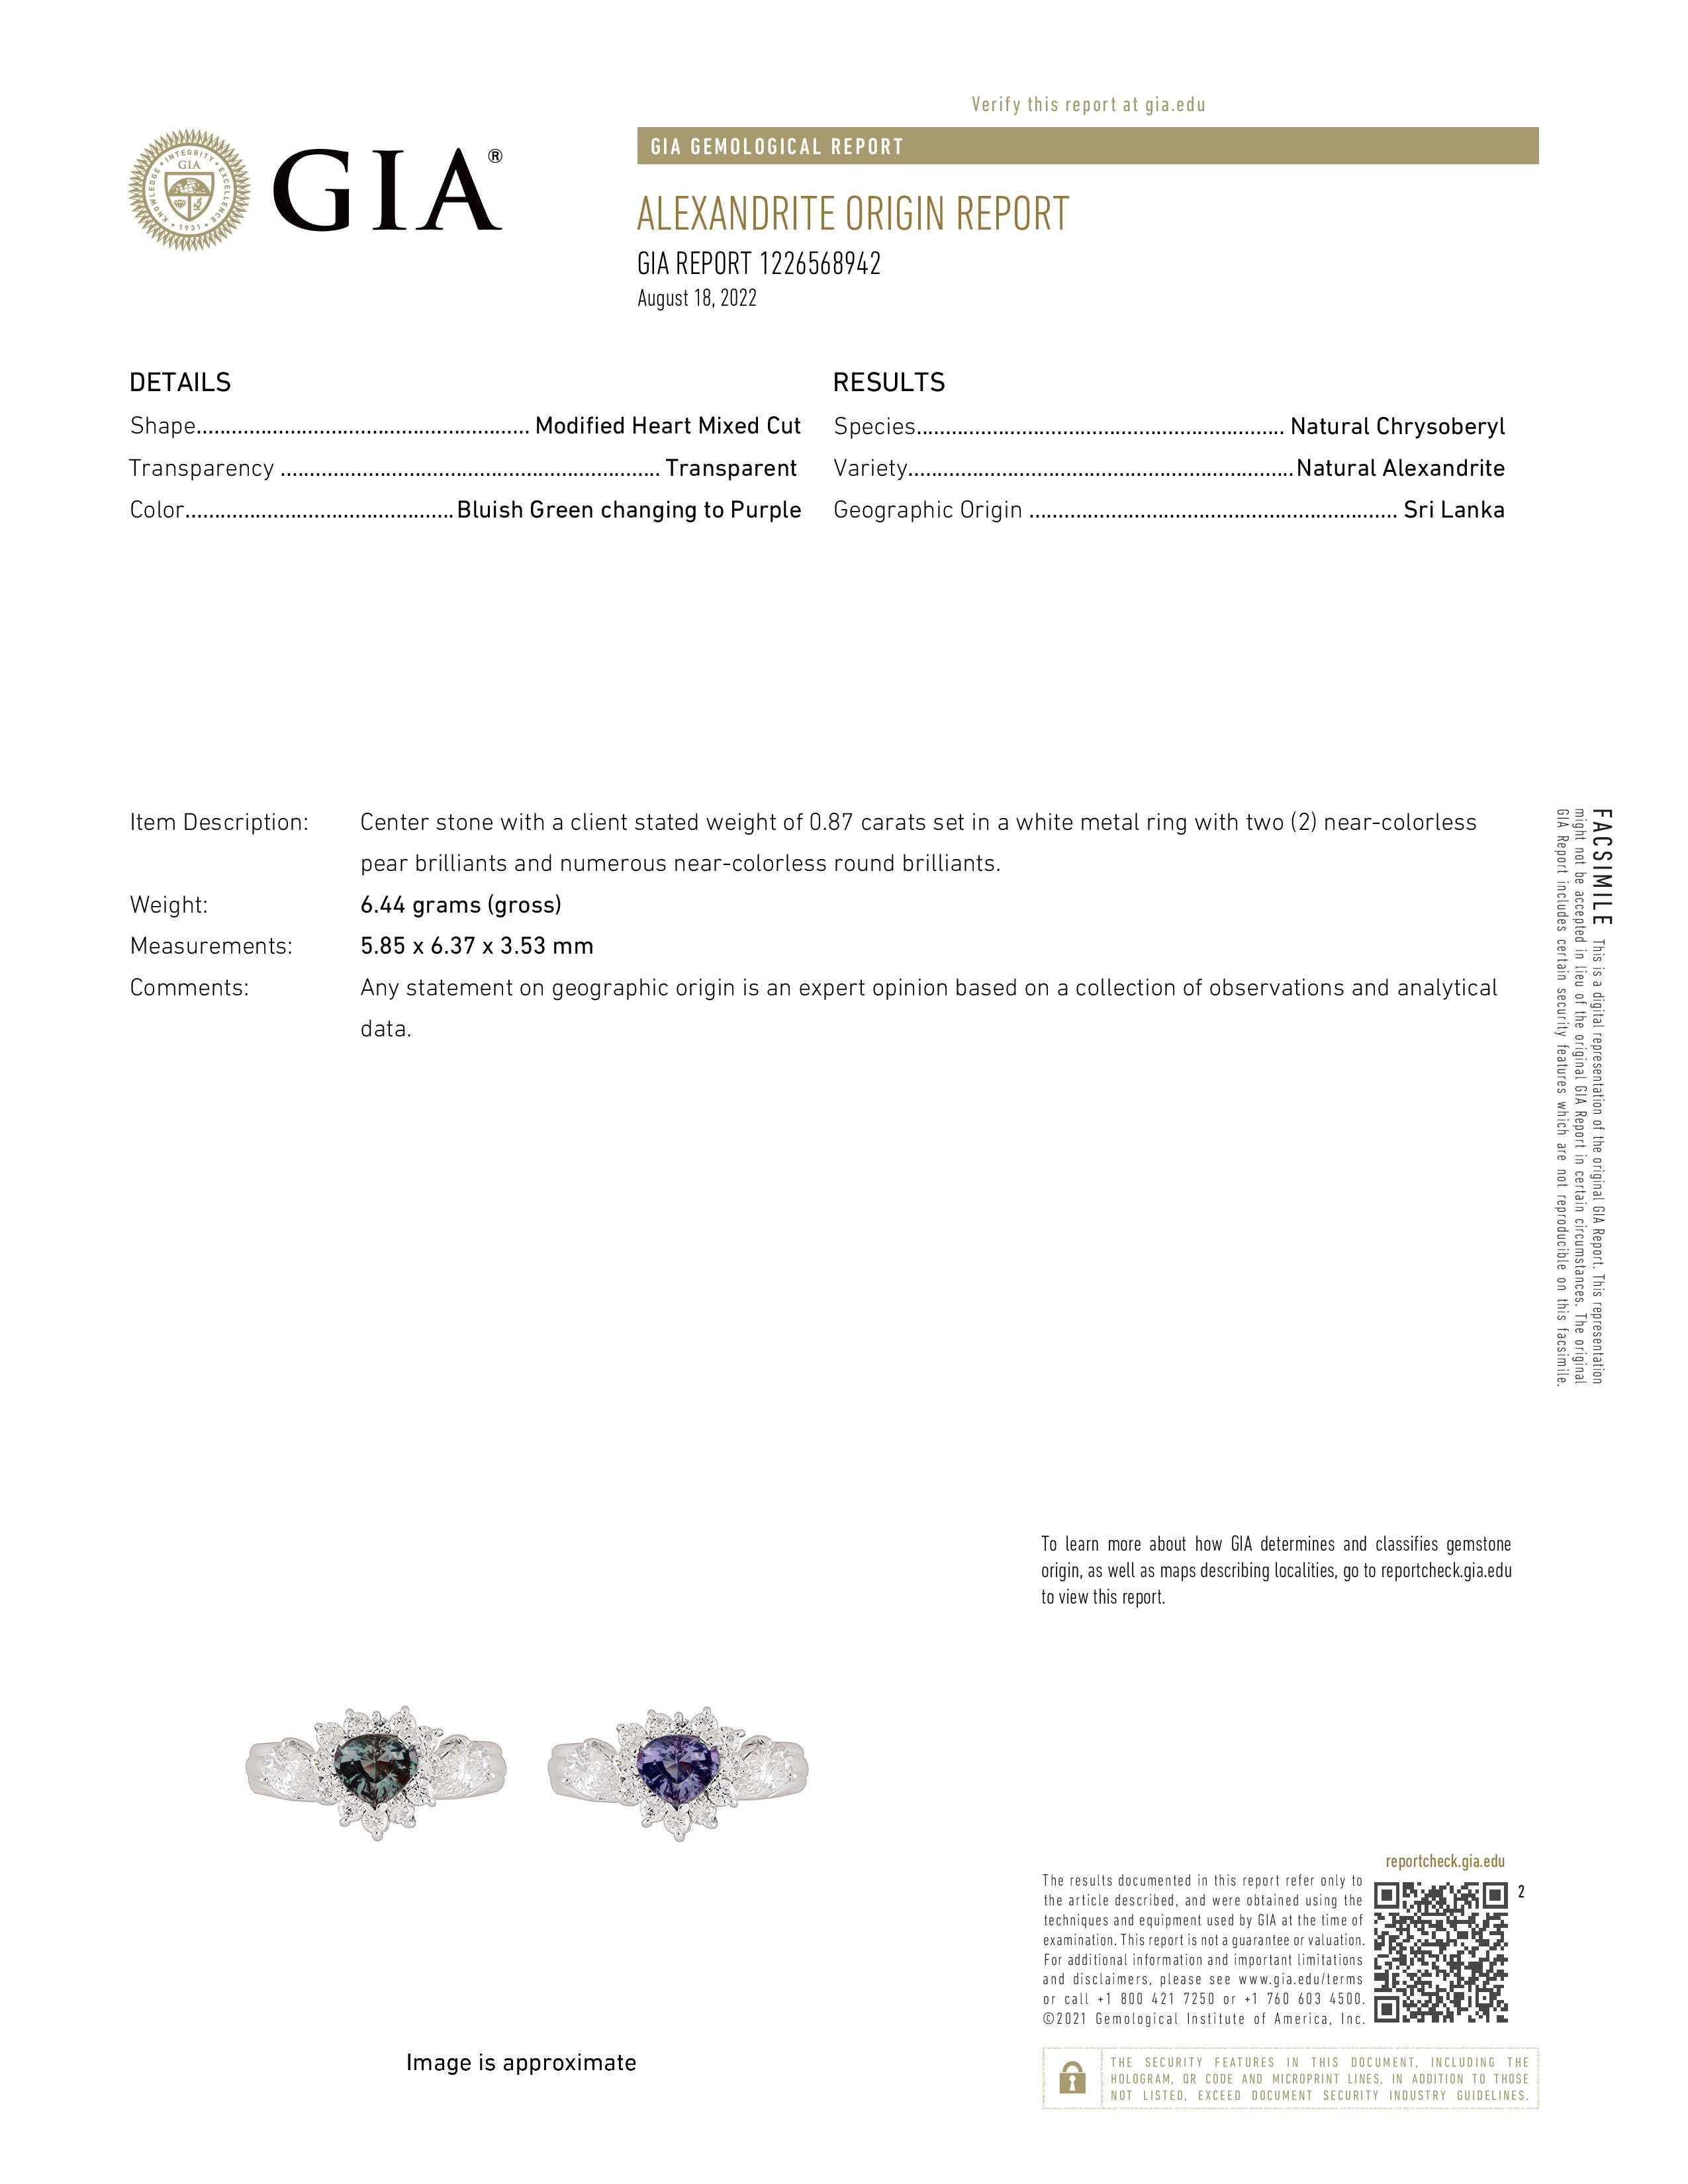 Women's Natural GIA Certified 0.87 Ct. Sri Lankan Alexandrite & Diamond Cocktail Ring For Sale